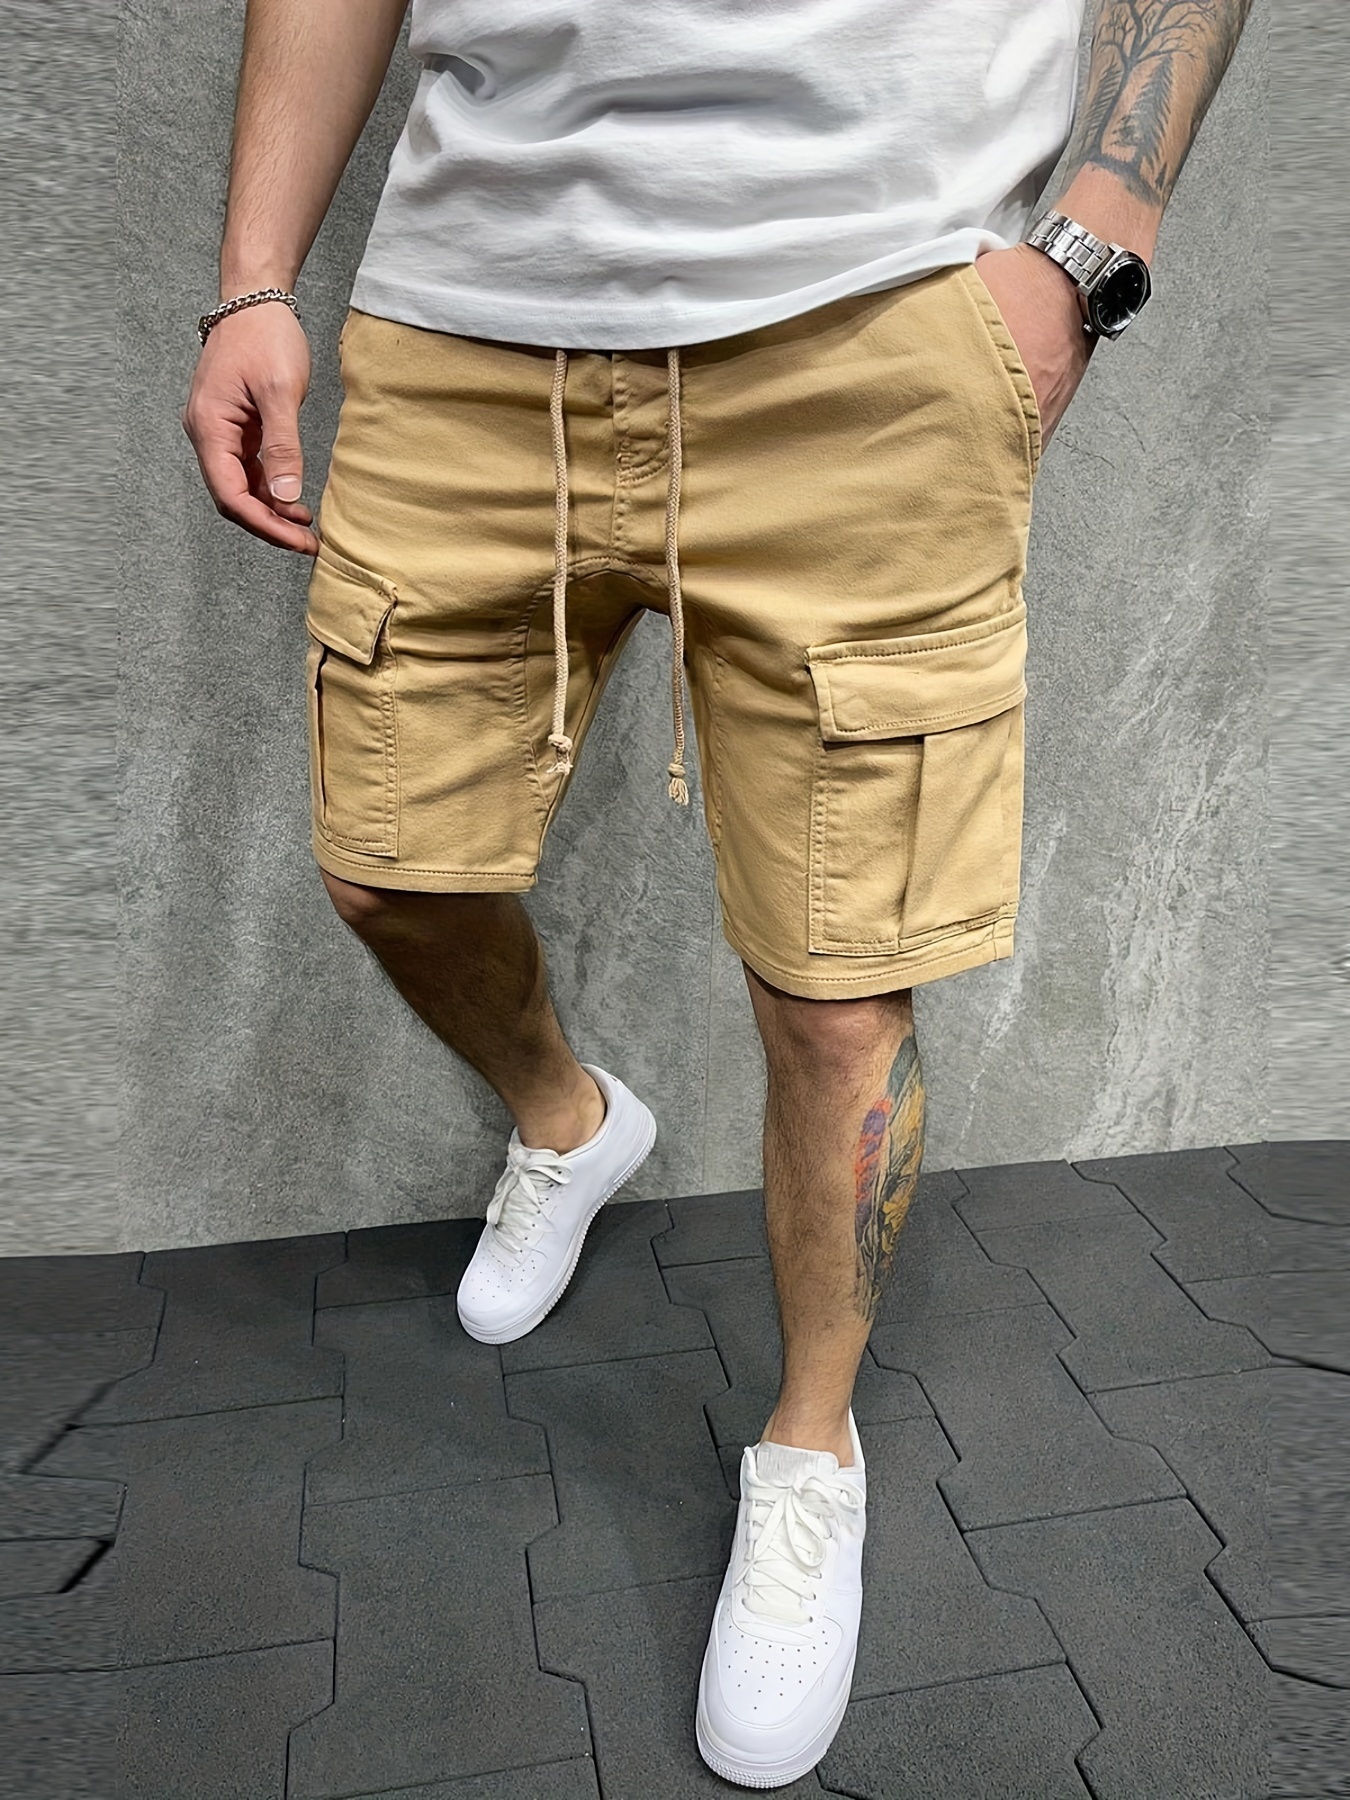 BAWHODK Shorts For Men Fashion Men's Pants Mens Shorts Baggy